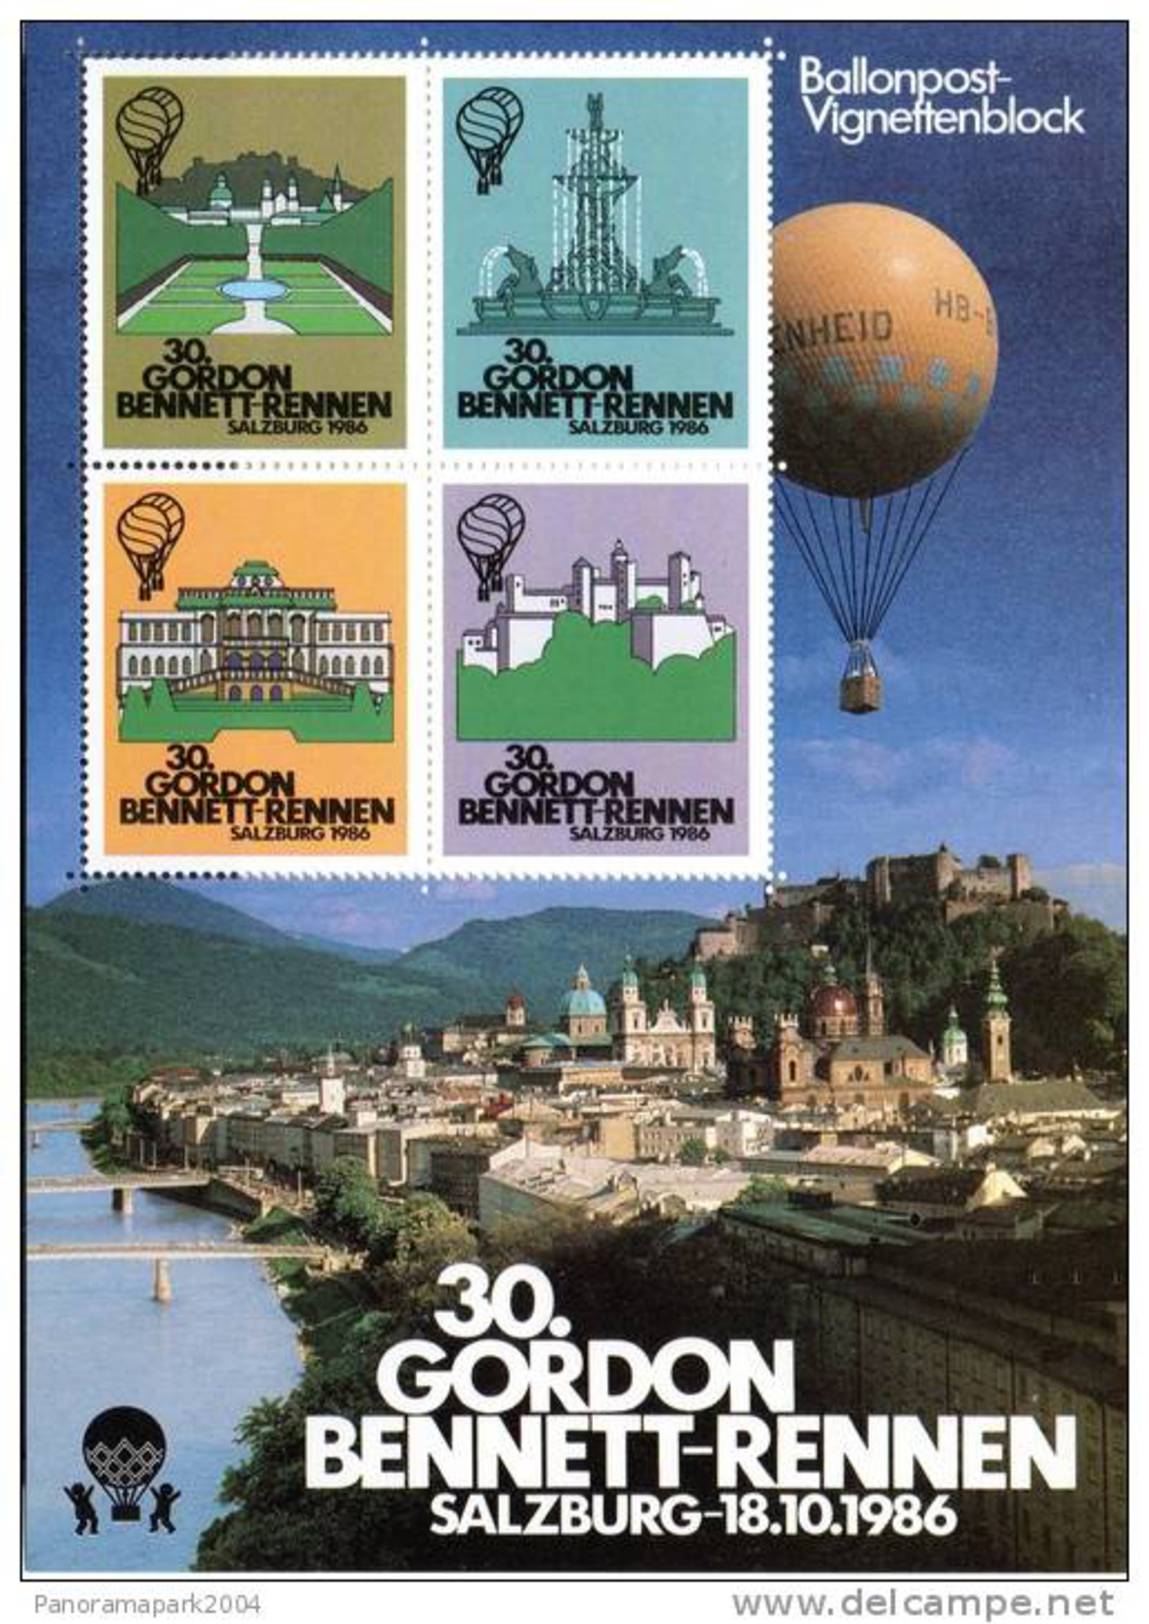 30. Gordon Bennett Rennen Salzburg 18.10.1986 Österreich Vignettenblock Ballonpost Heißluftballon - Ballons